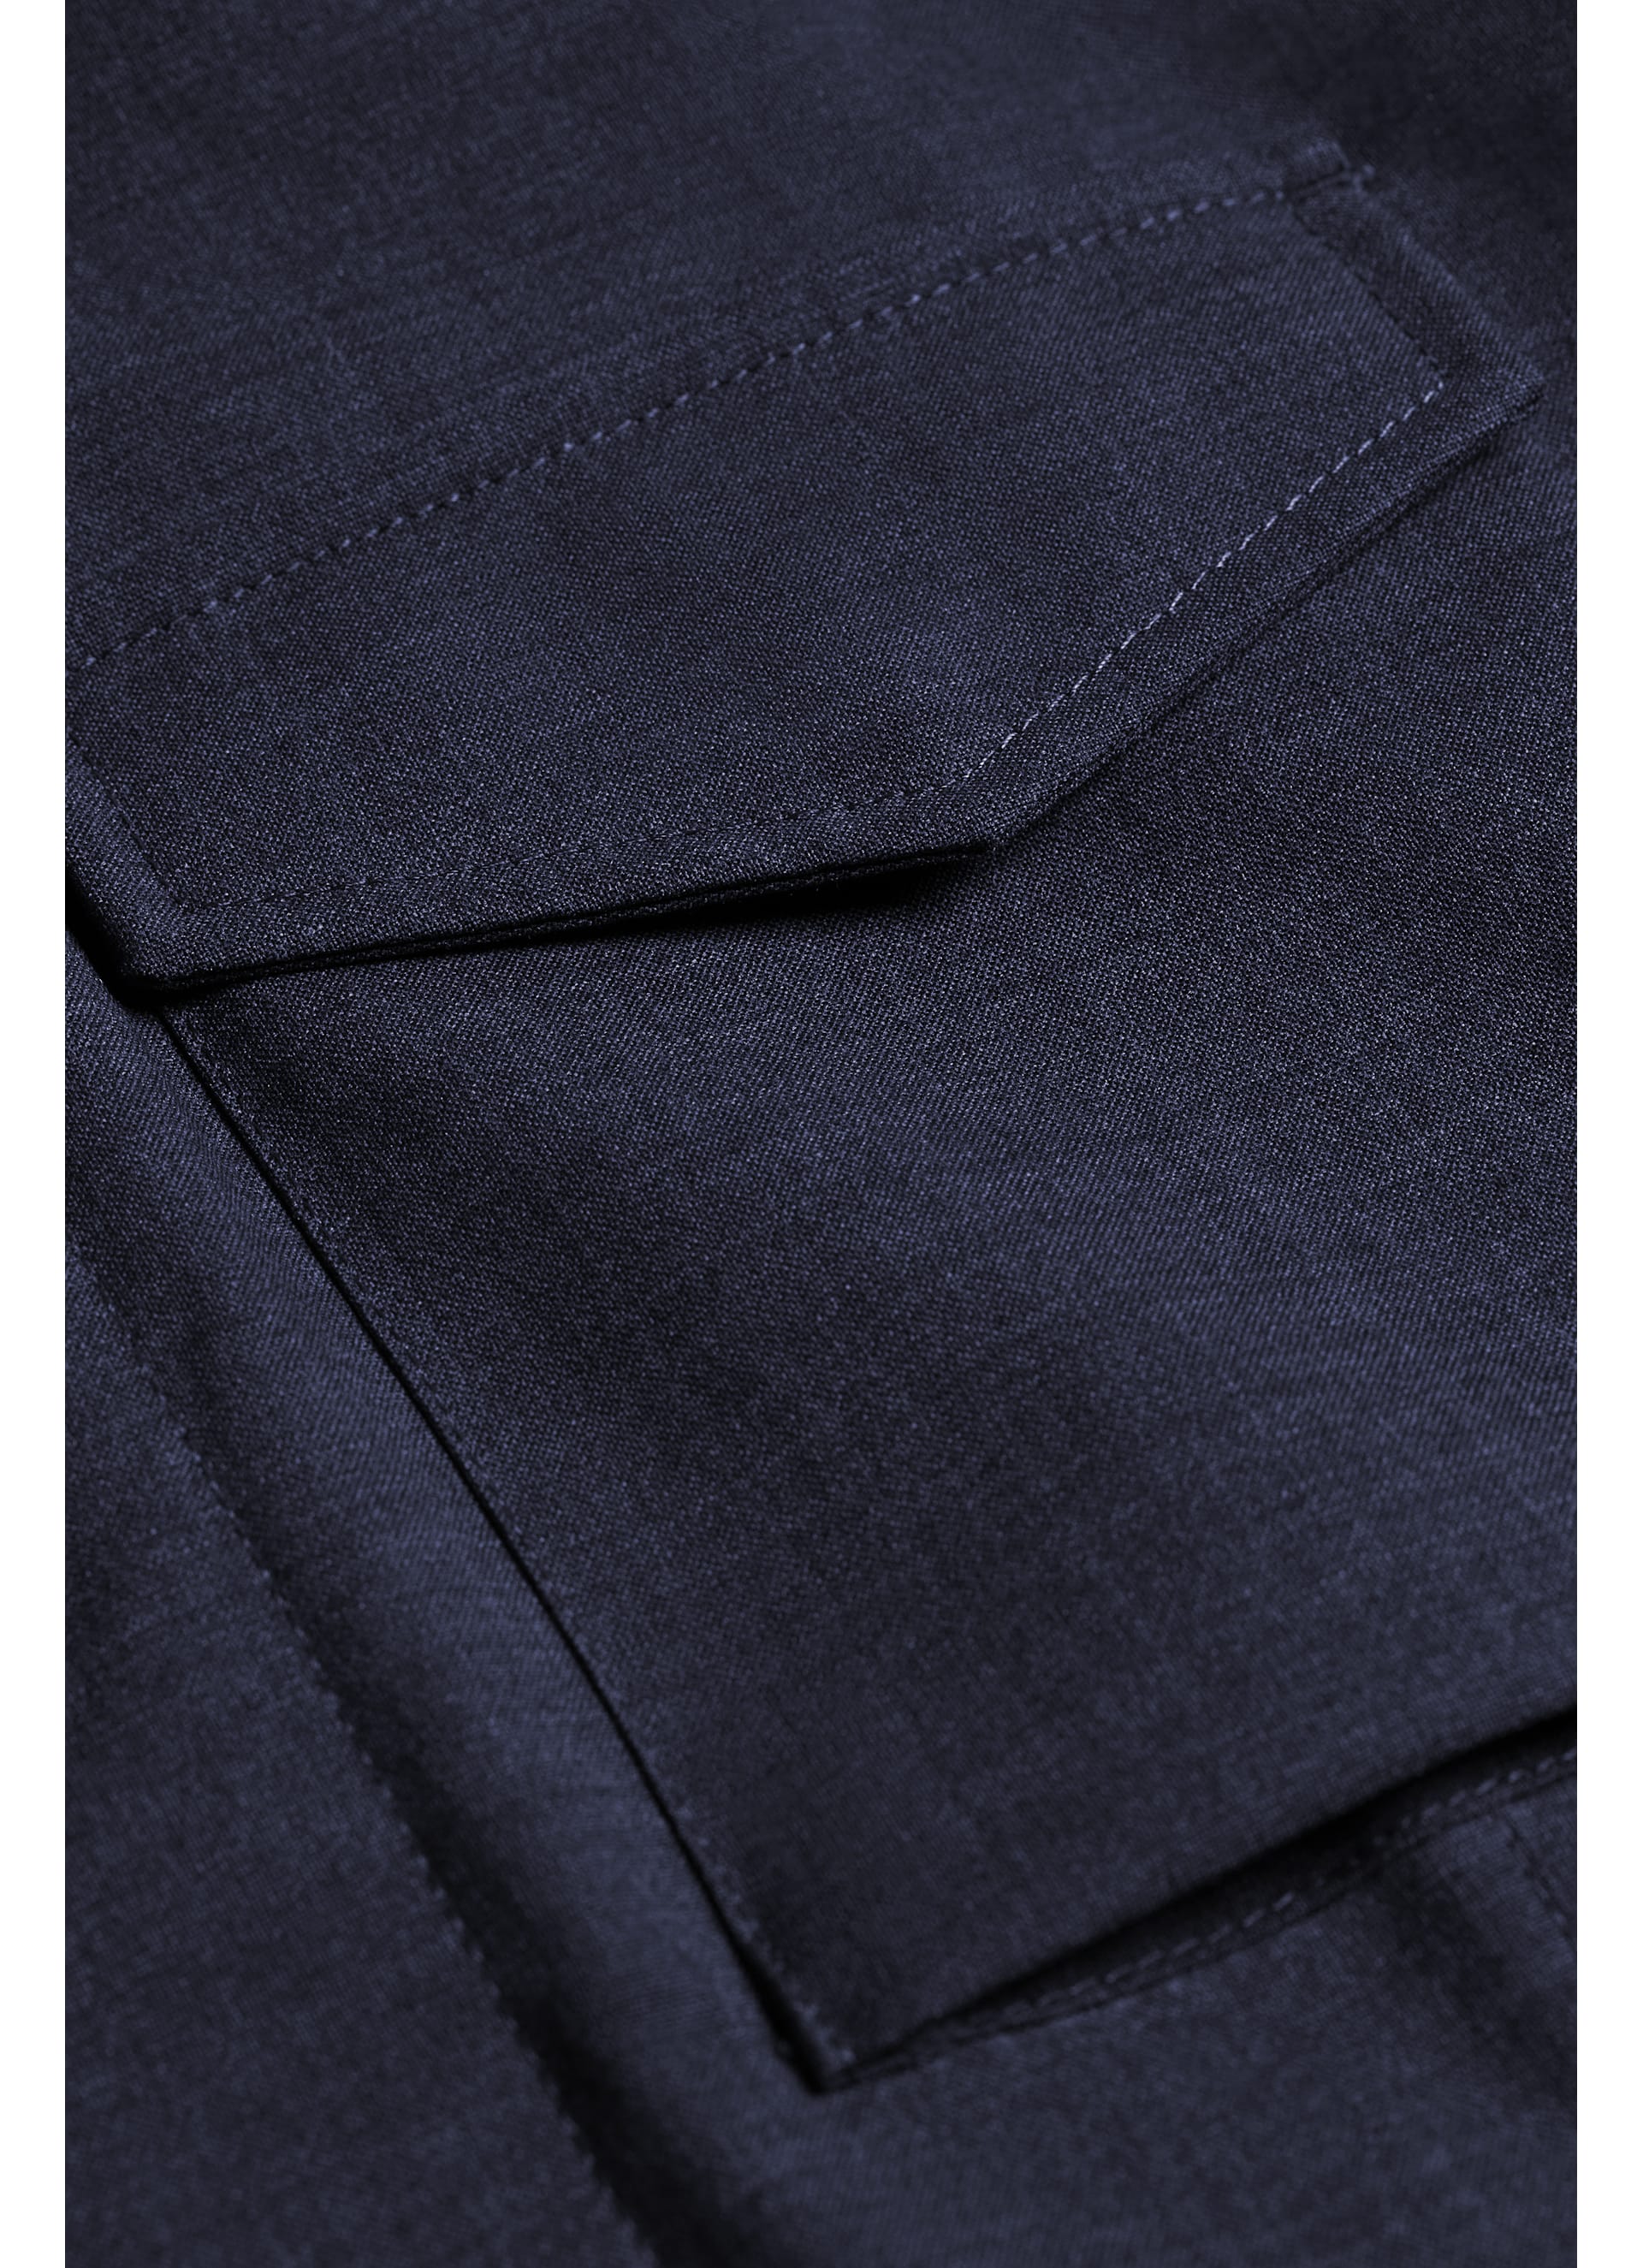 Blue Field Jacket J604i | Suitsupply Online Store